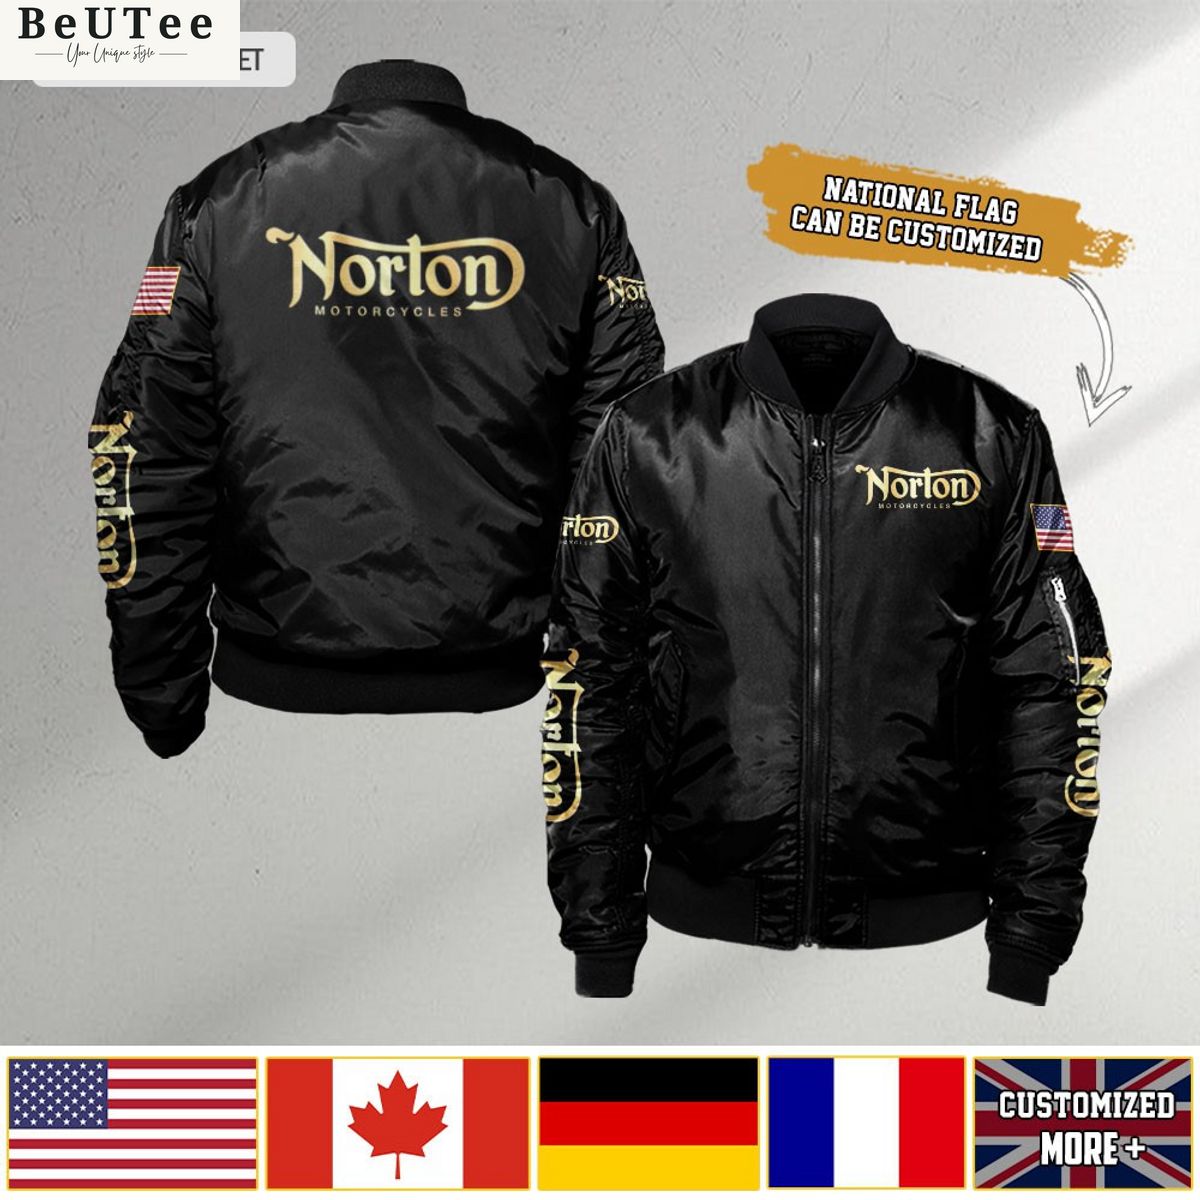 norton custom flag 3d bomber jacket 1 n1su2.jpg